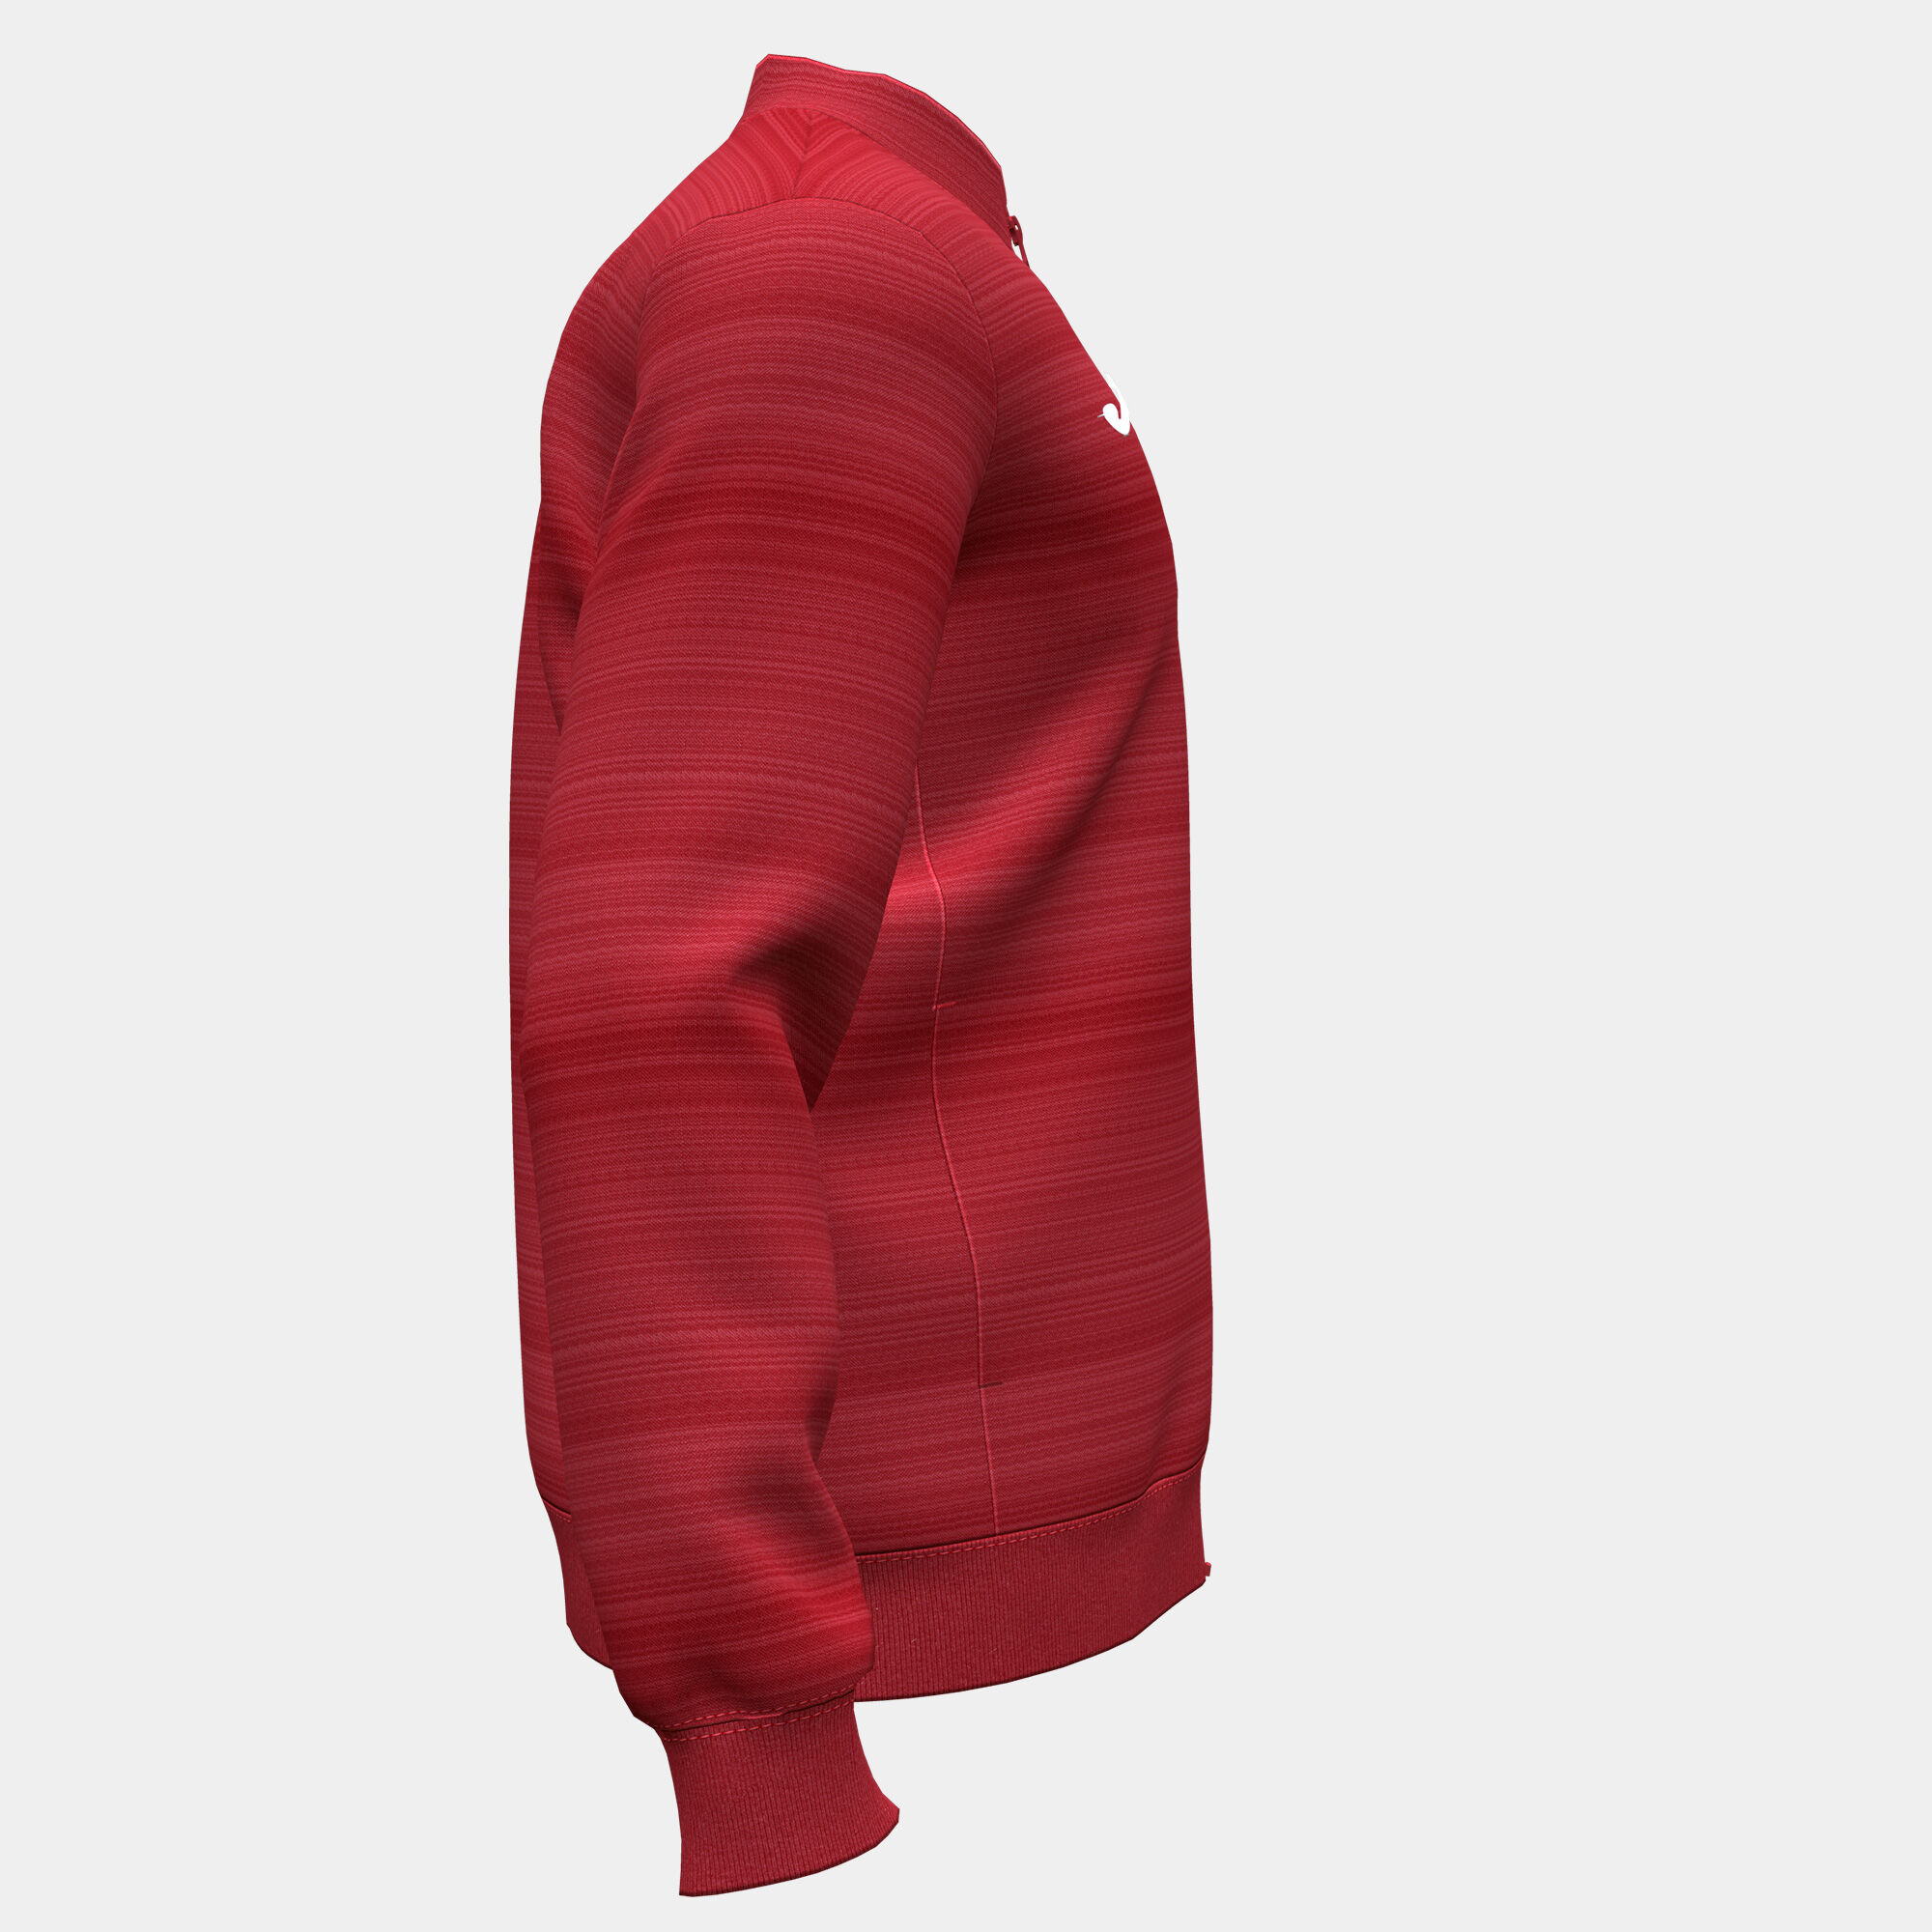 Jachetă bărbaȚi Grafity III roșu